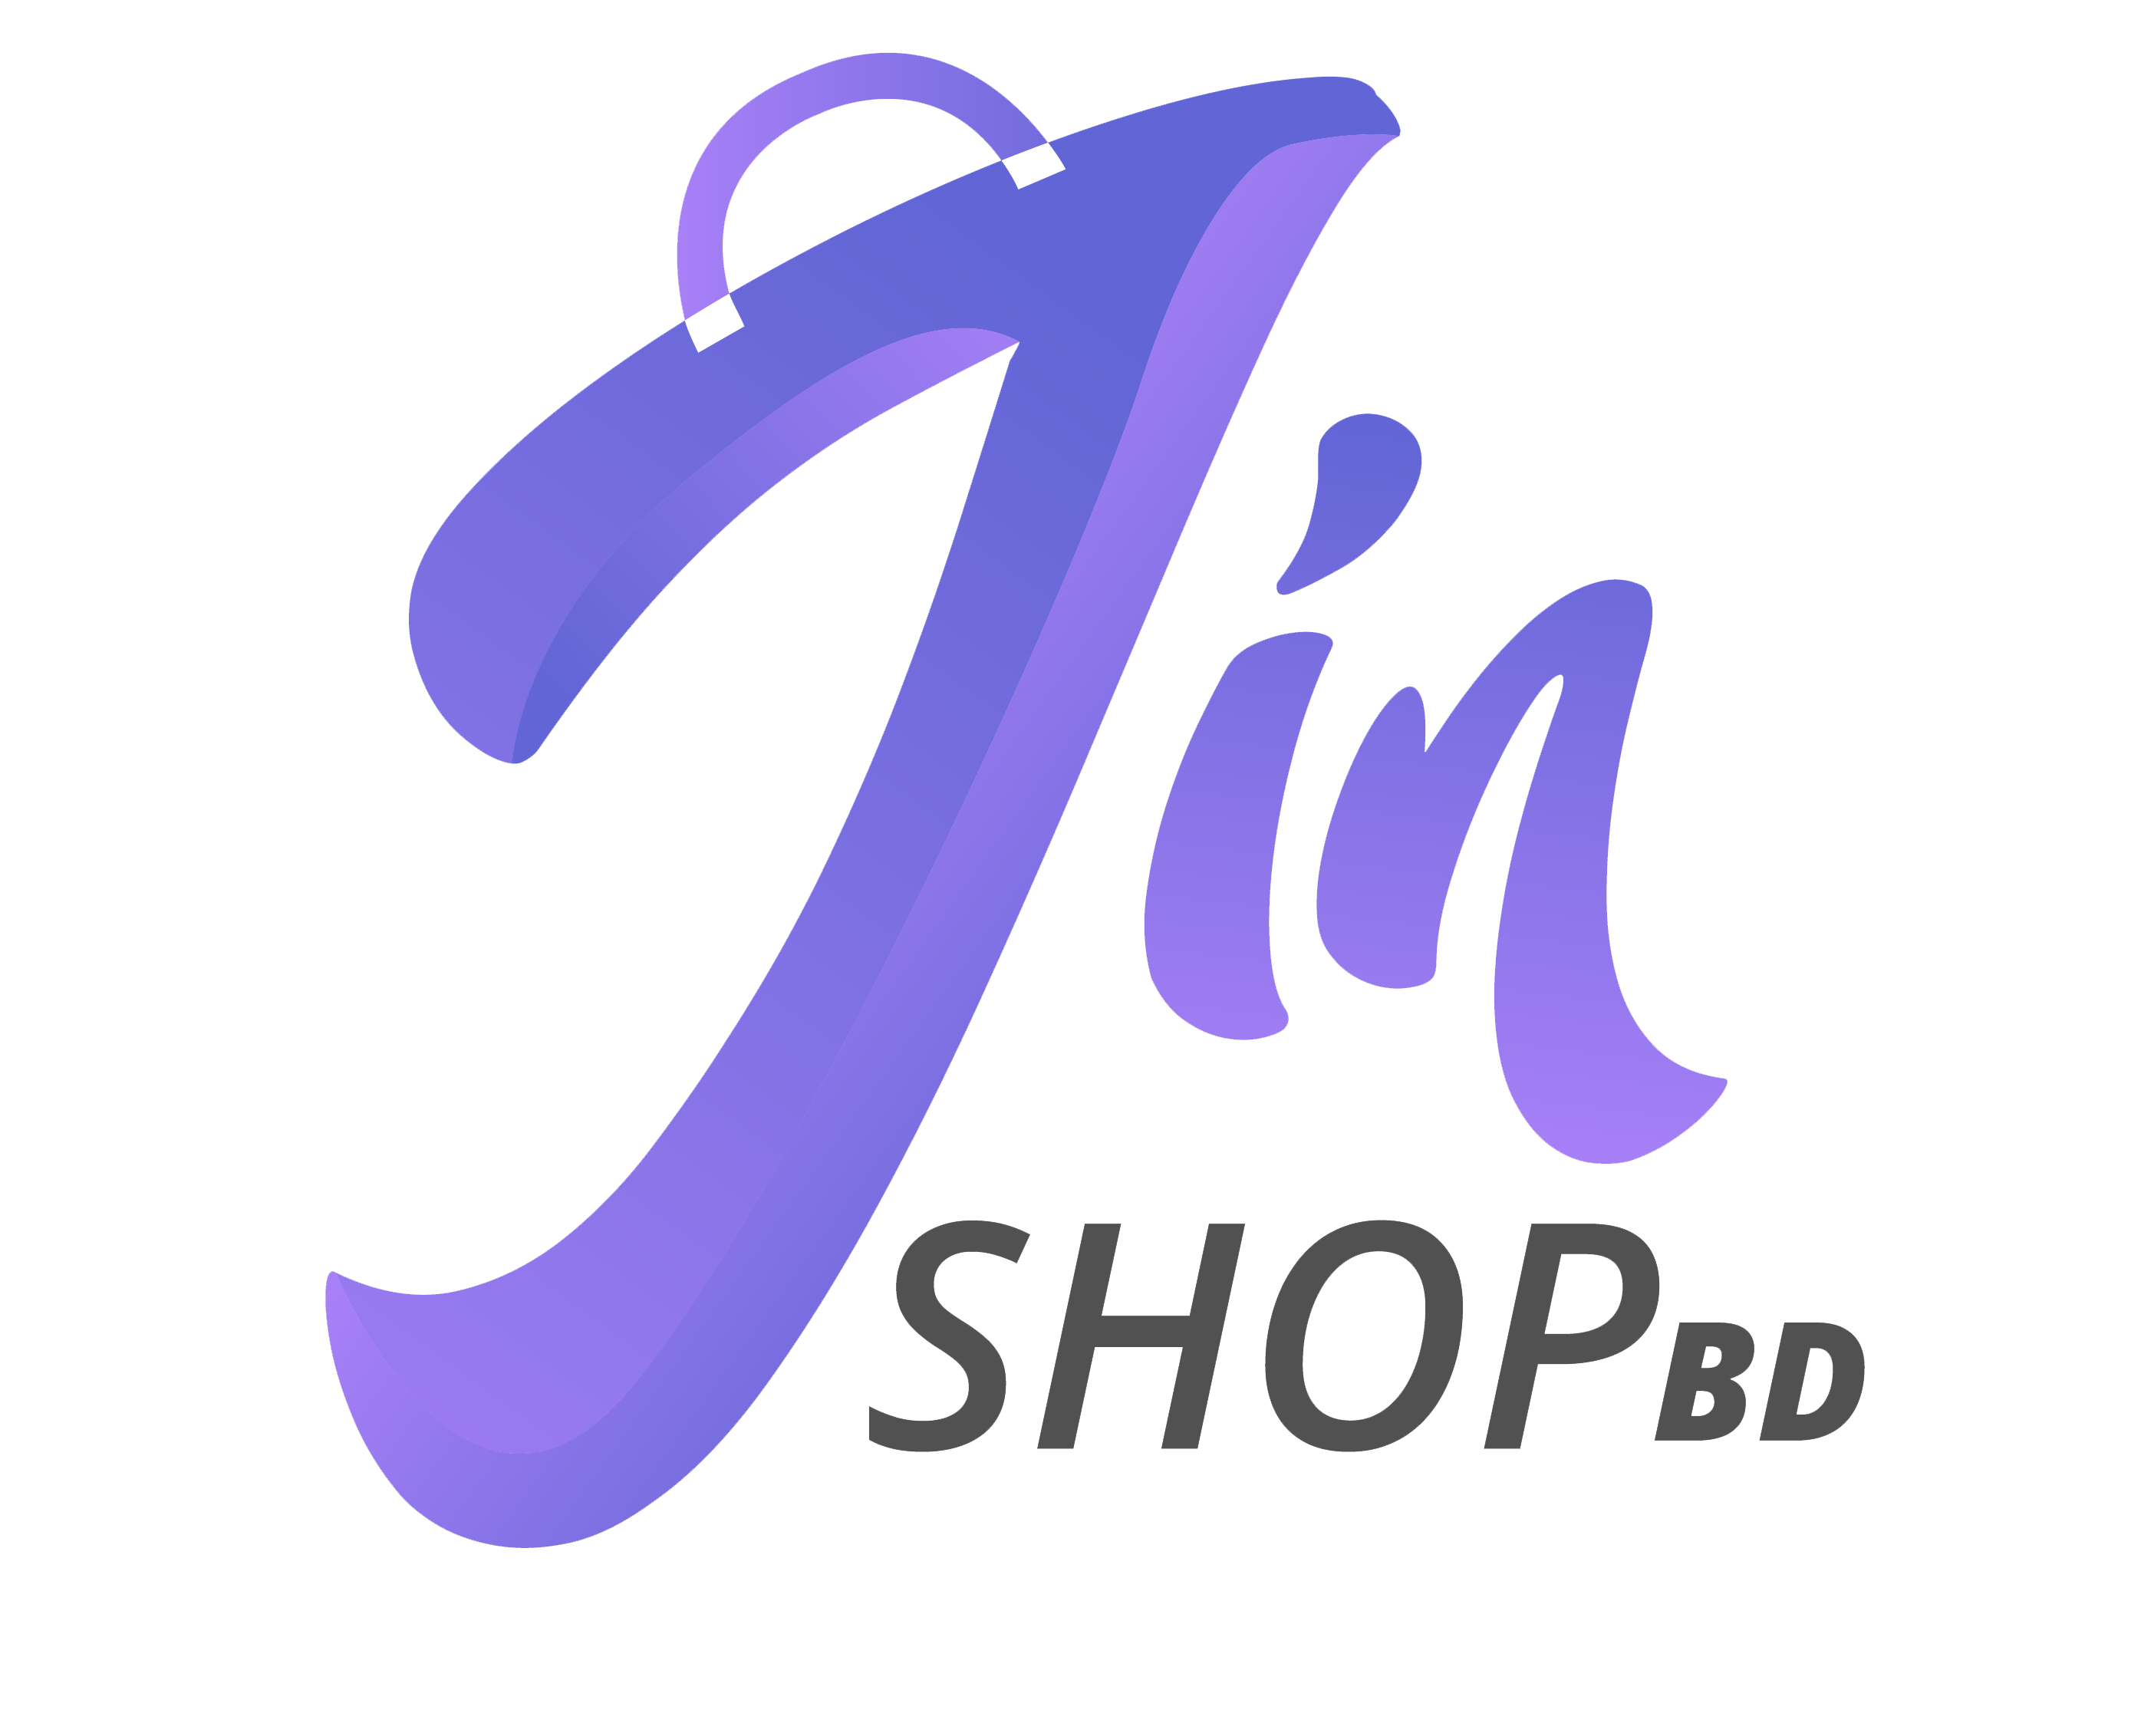 Jin eShop